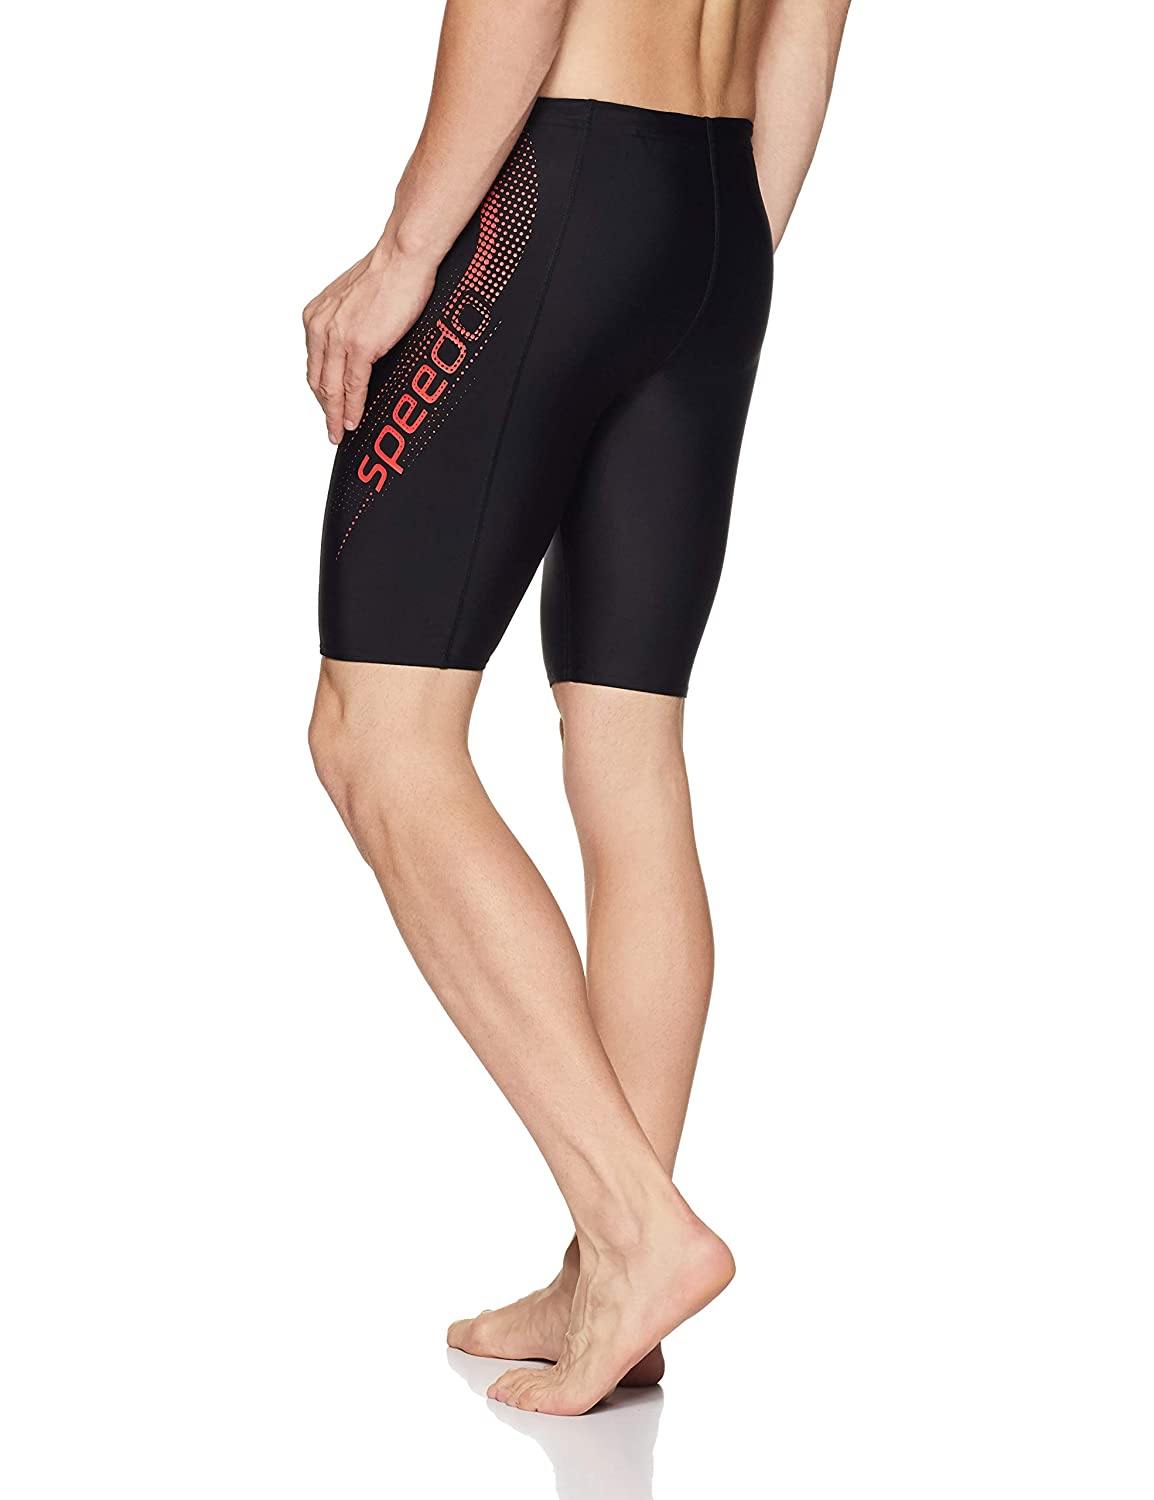 Speedo Male Swimwear Sports Logo Jammer Black - Best Price online Prokicksports.com